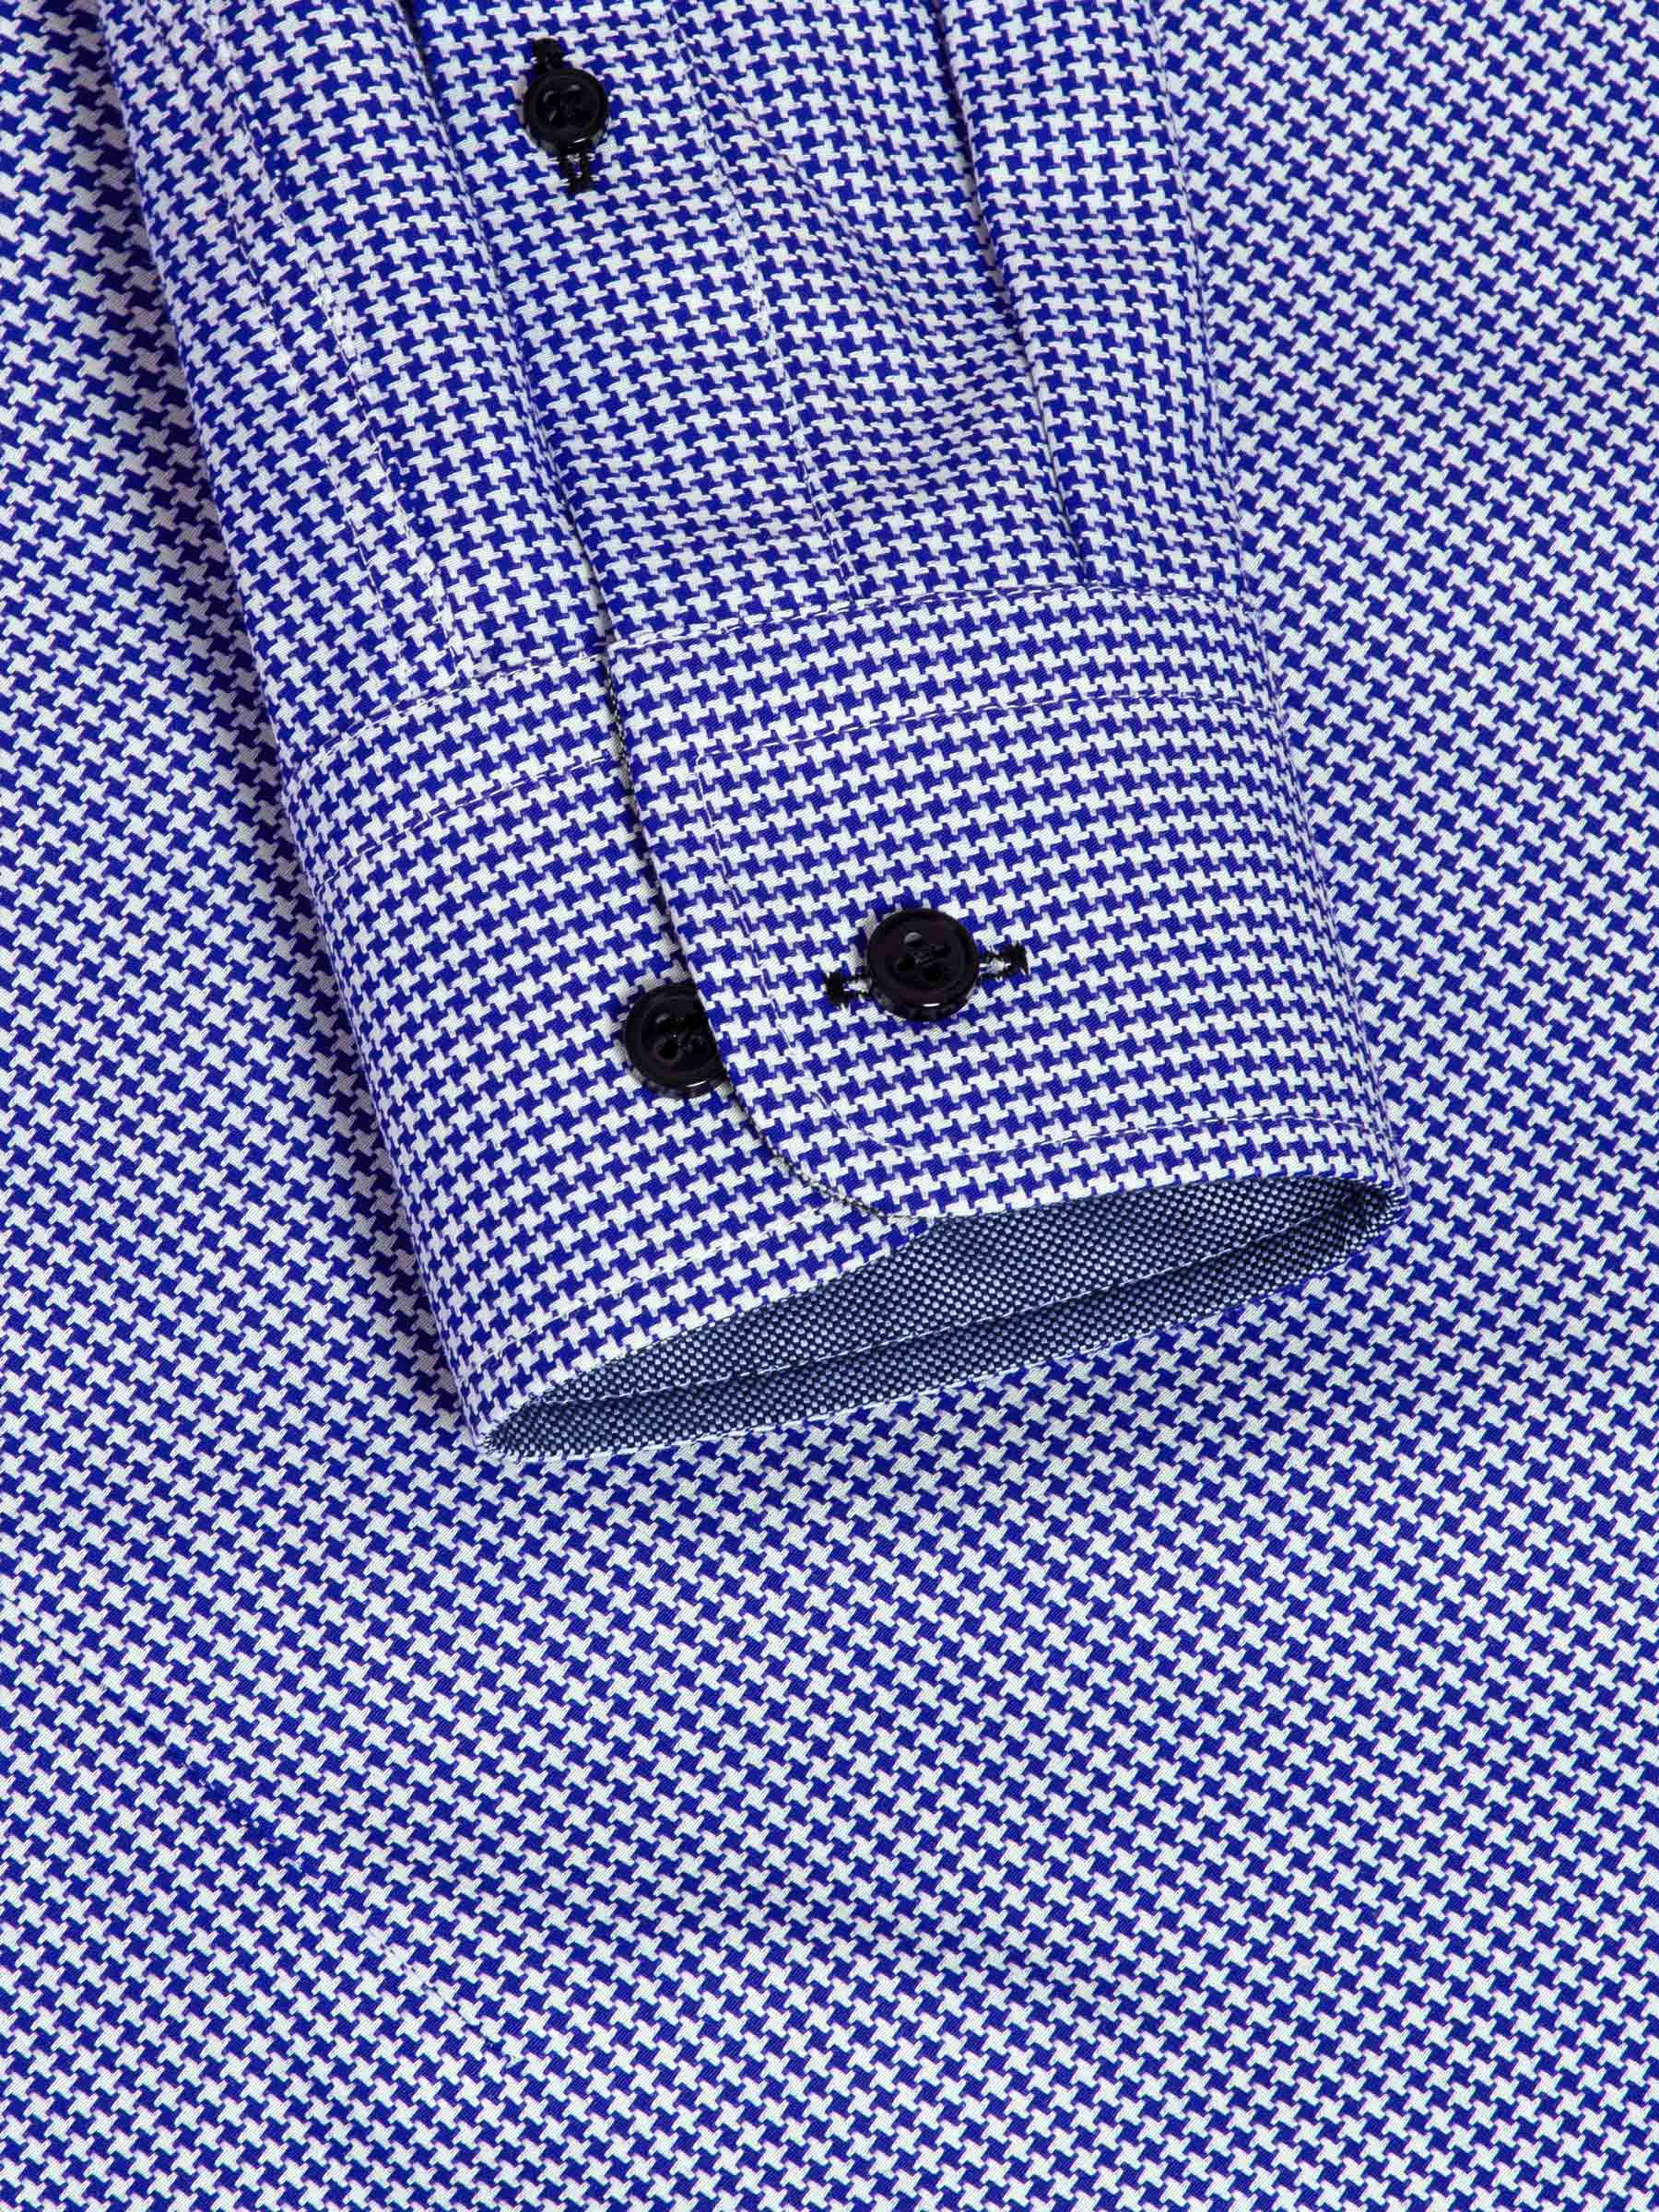 Vermilion Checkered Royal Blue Overhemd Lange Mouw